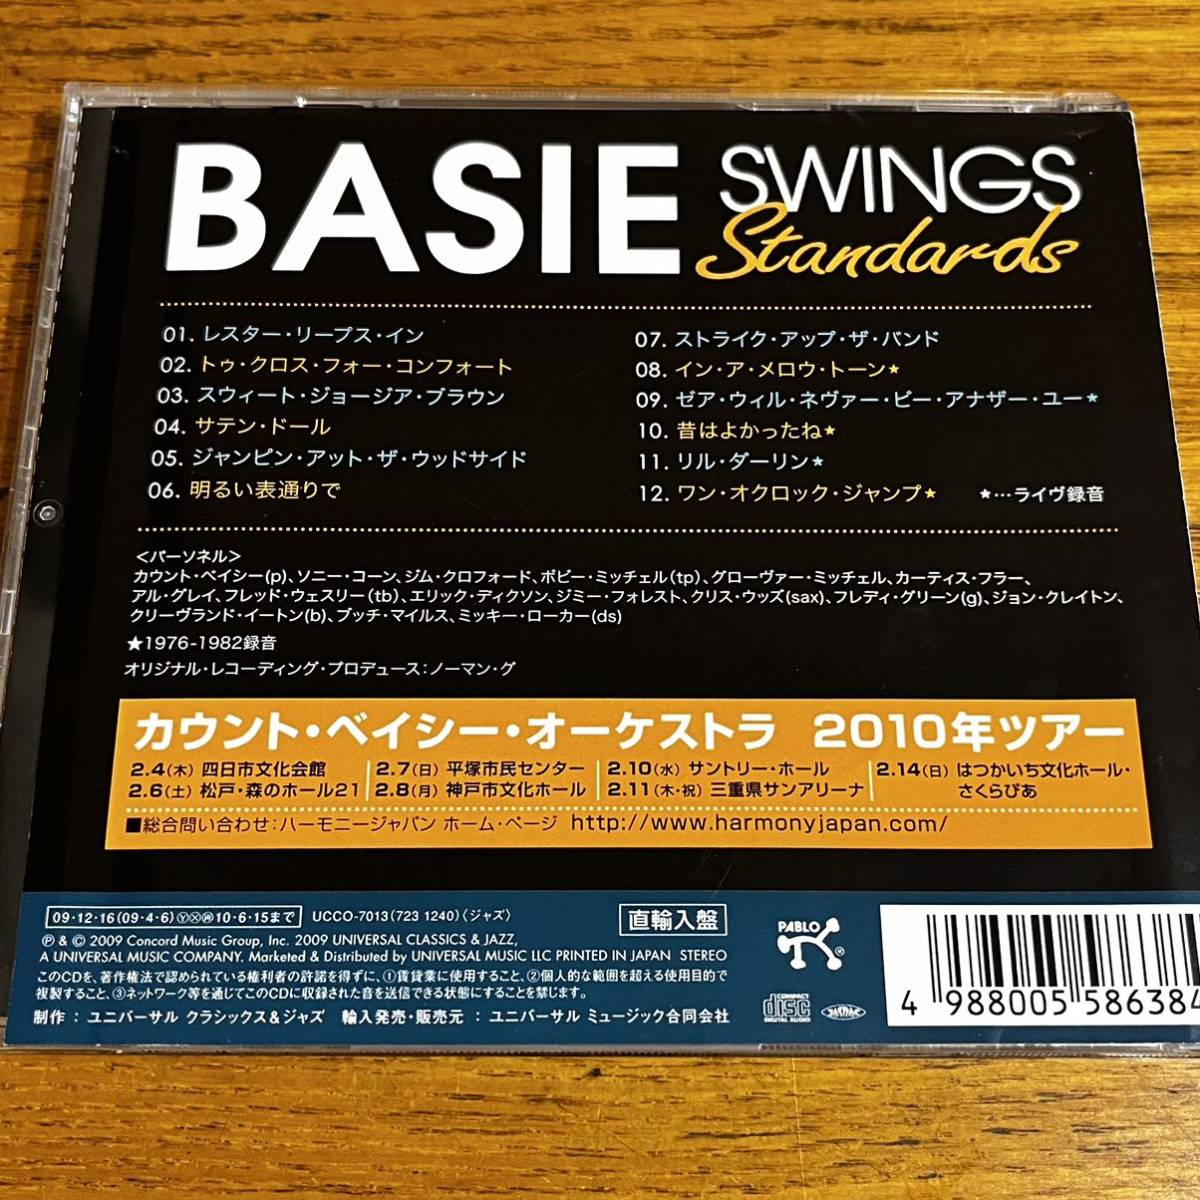 CD 帯付き カウントベイシー COUNT BASIE BASIE SWINGS STANDARDS 日本語解説有り ディスク良好_画像2